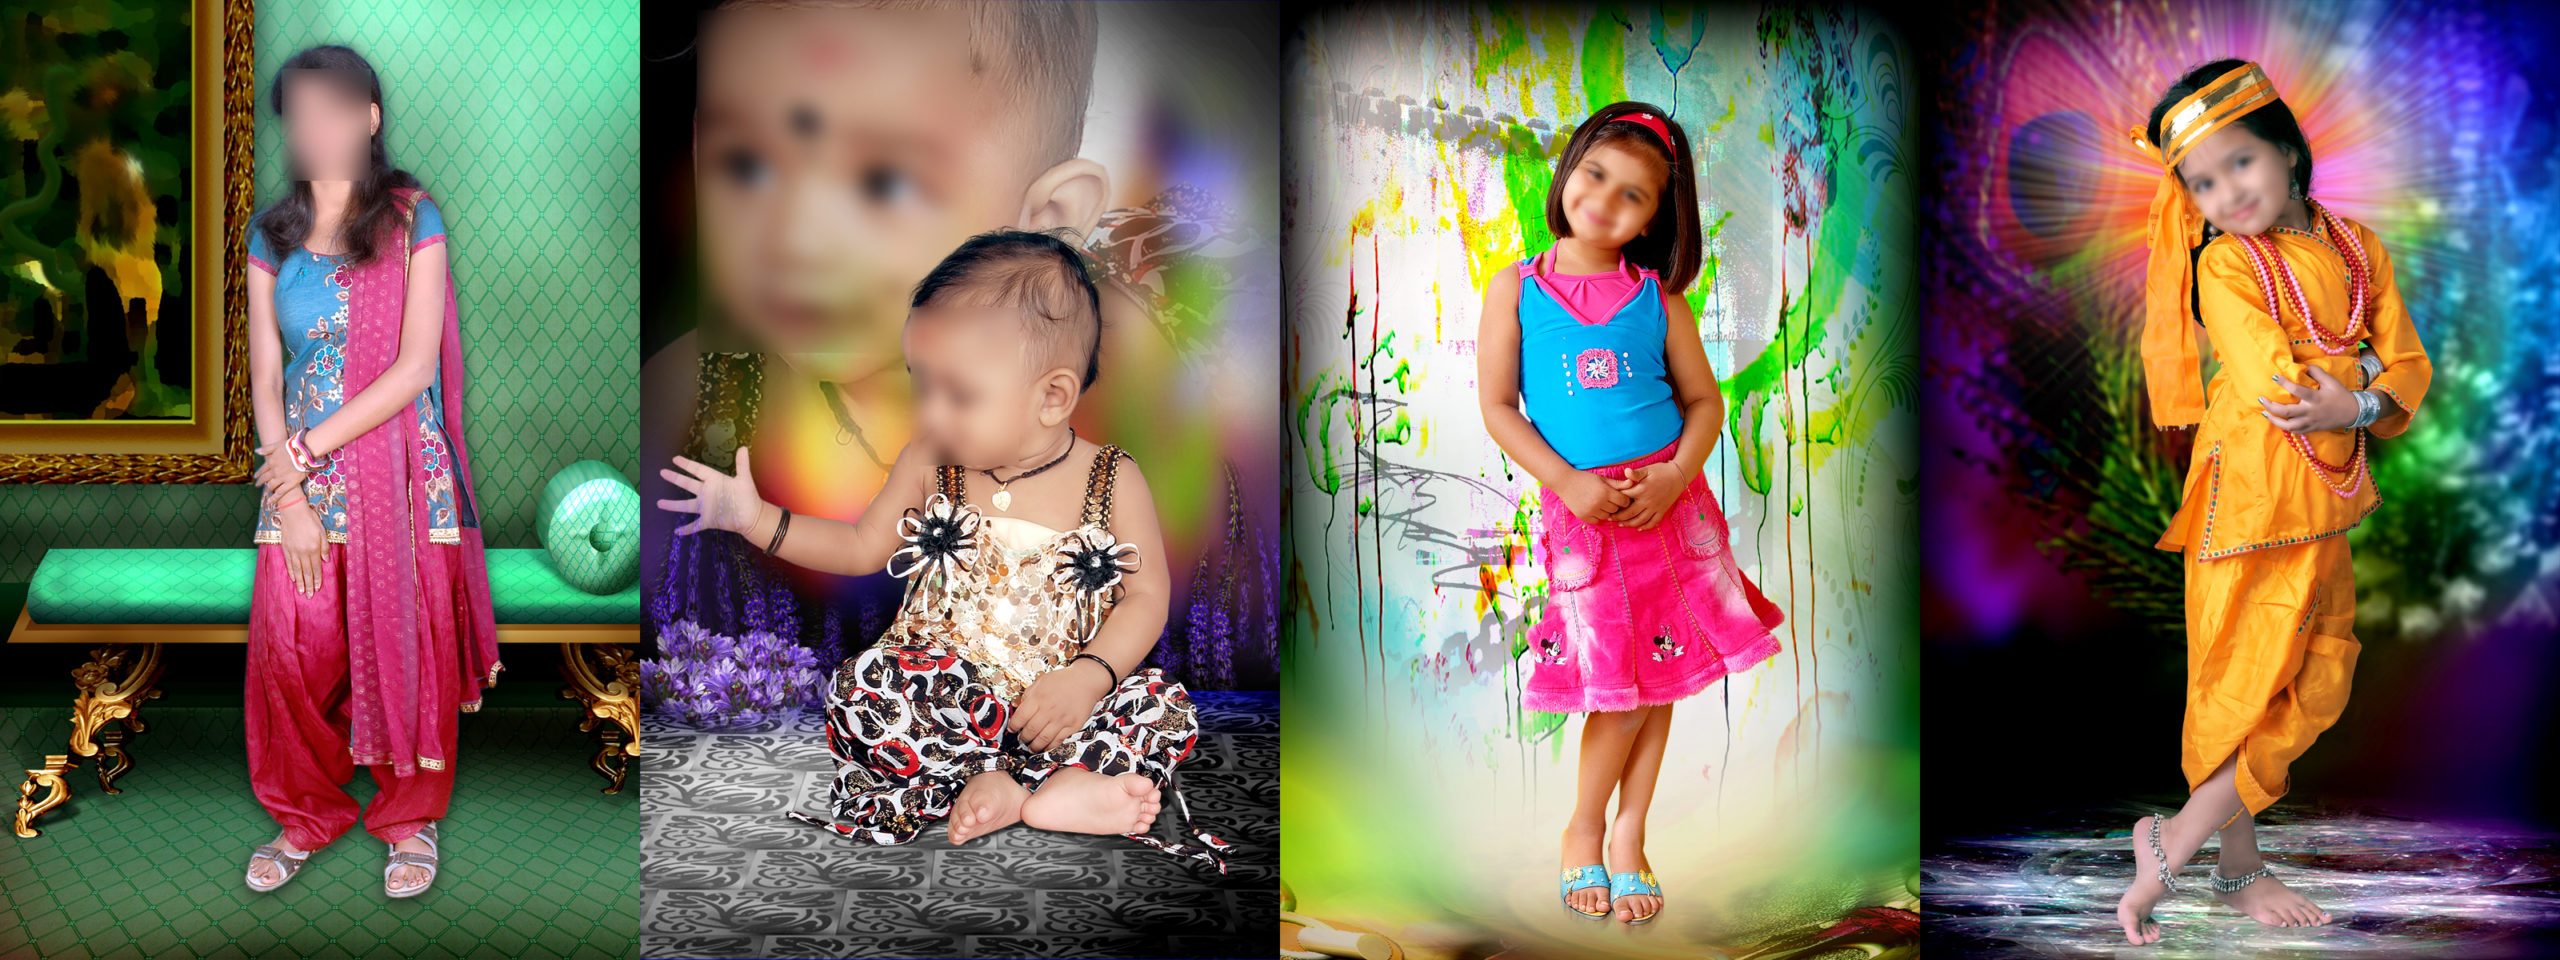 Photoshop Studio Background 4x6 Free Download 1 Photo4u In